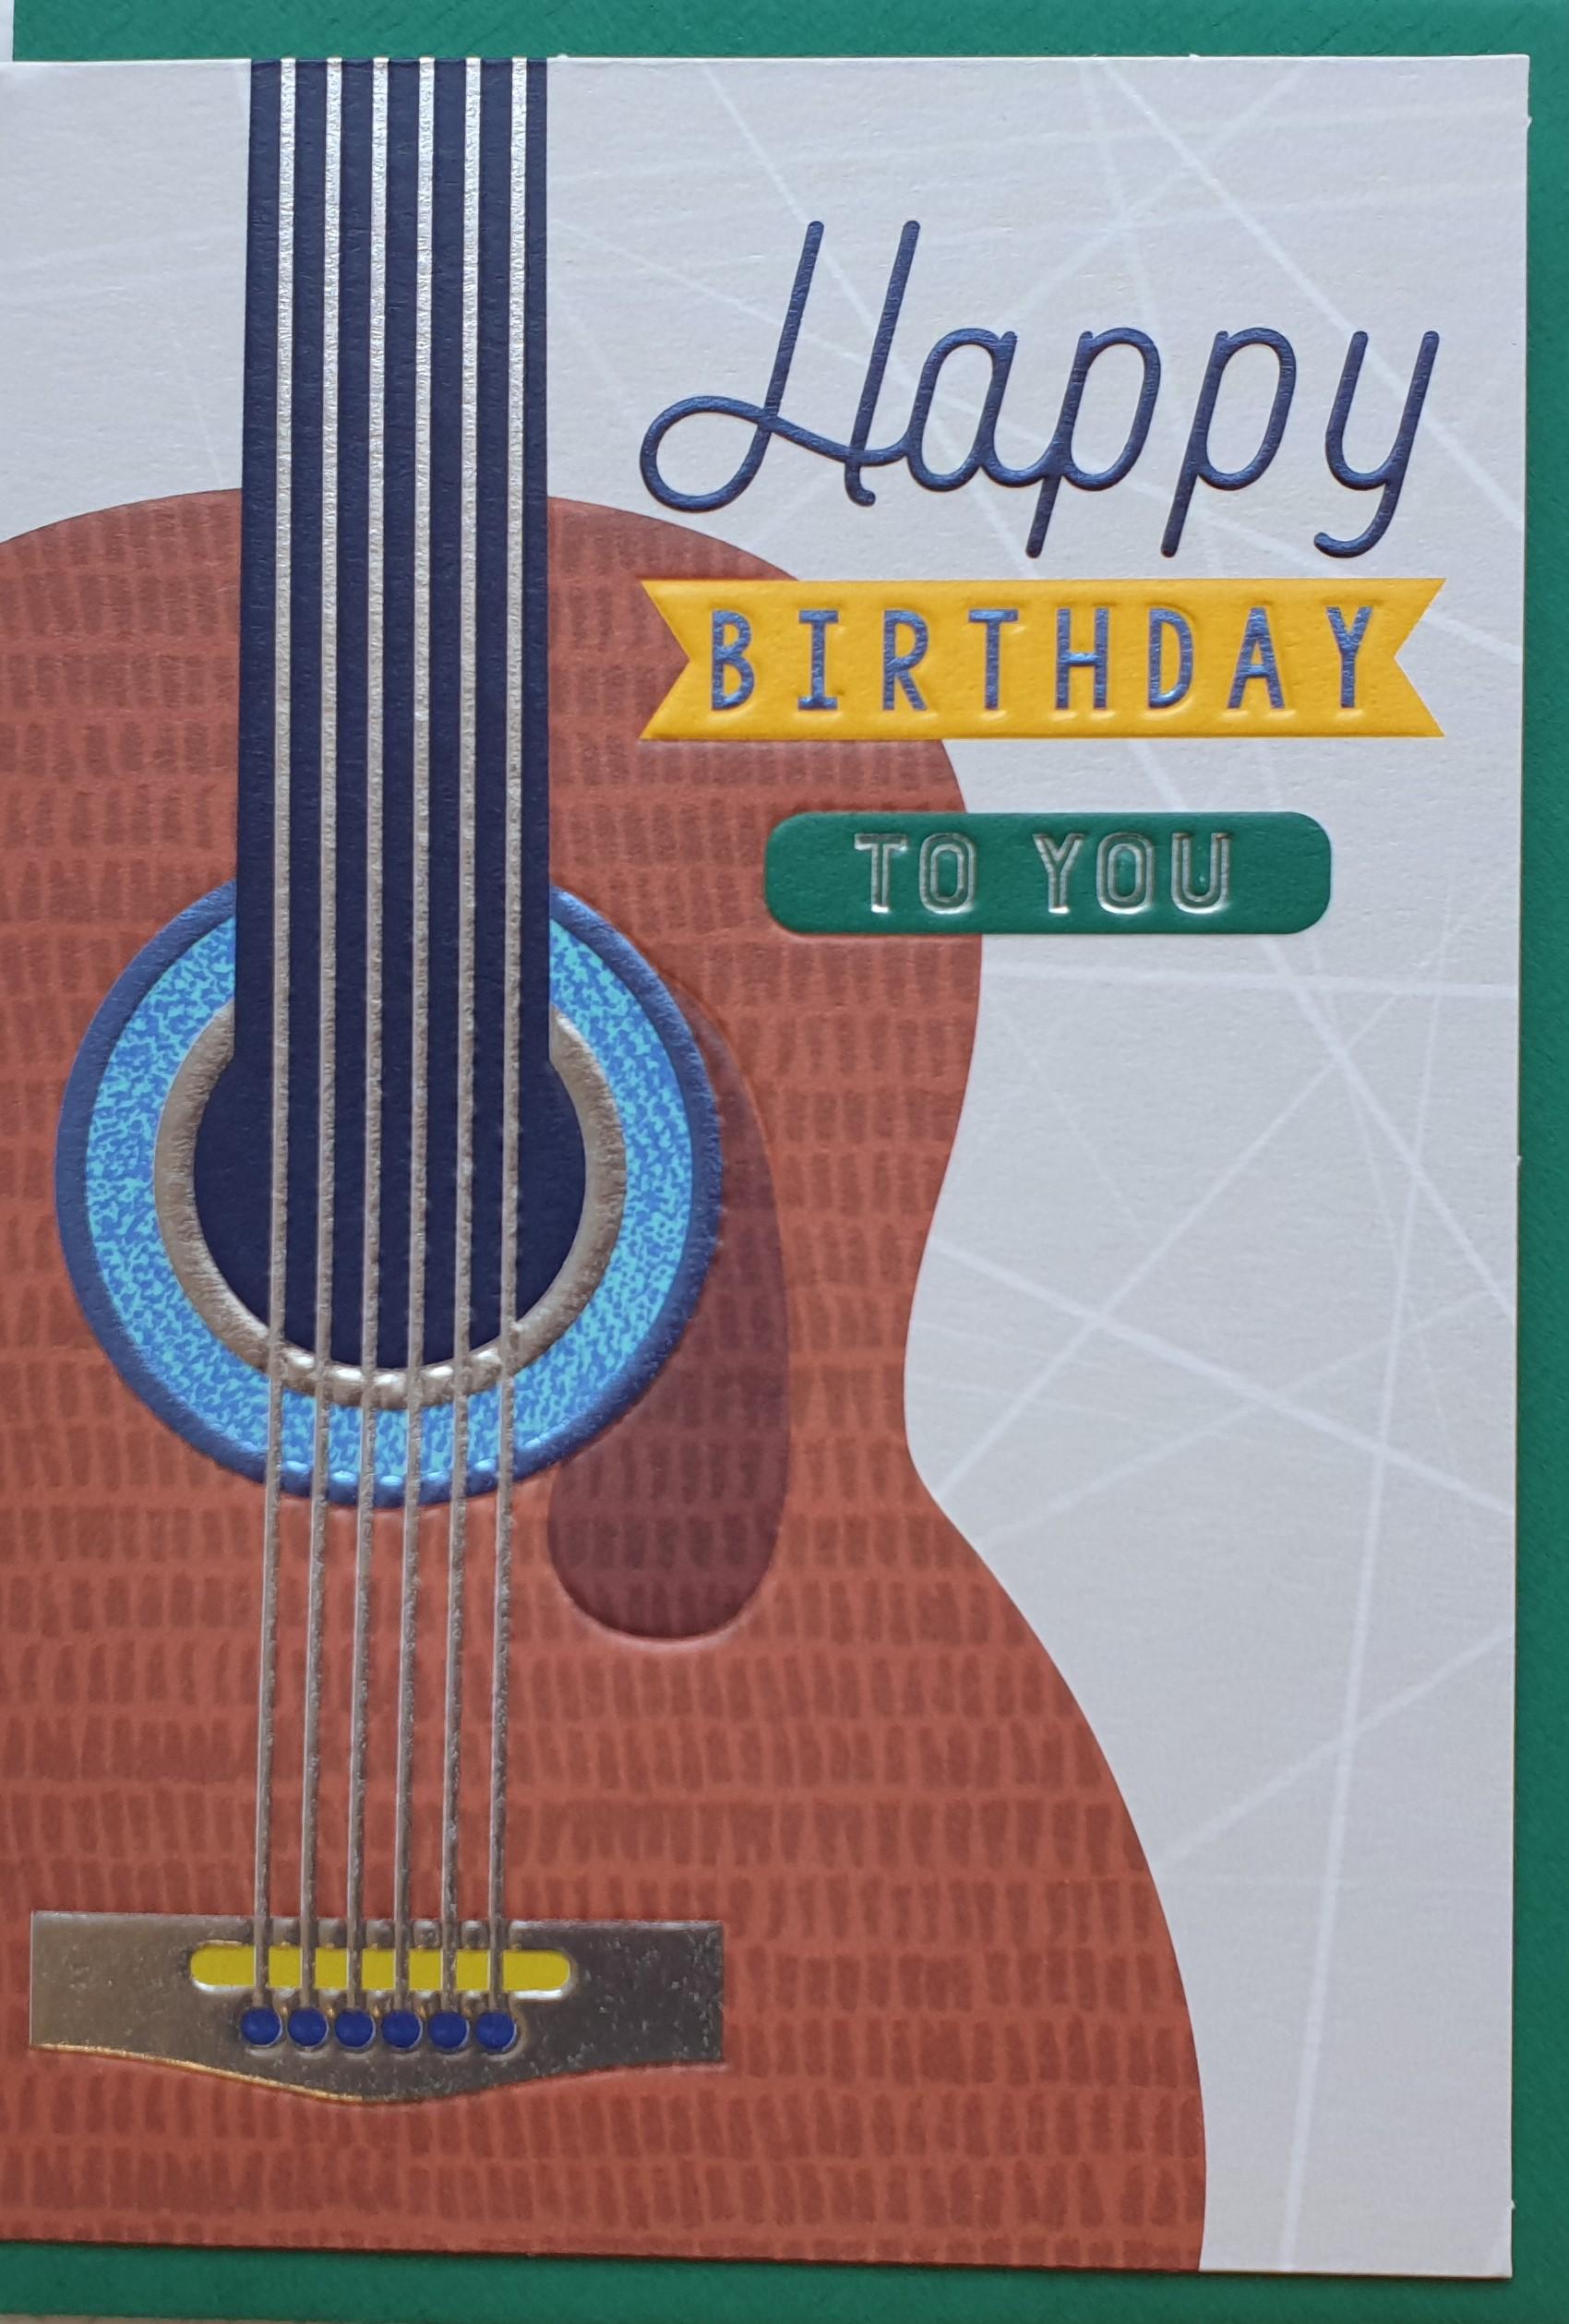 Doppelkarte Happy Birthday to you mit Gitarre